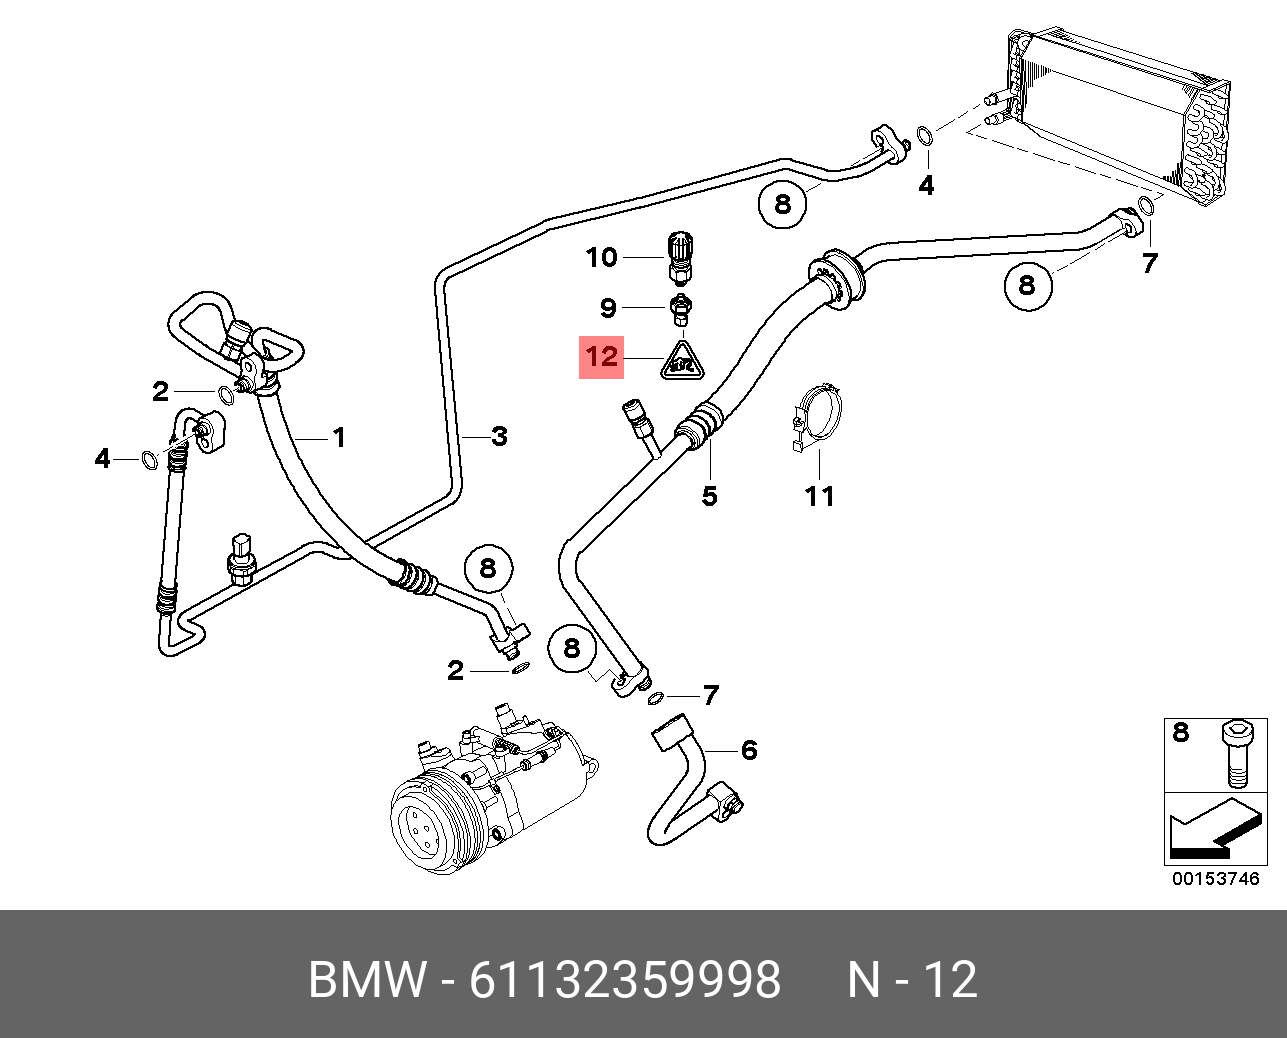 Кондиционер бмв х5 е53. Схема кондиционера БМВ х5 е53. BMW e53 система кондиционера. Датчик давления хладагента БМВ х5 е53. БМВ х5 система кондиционирования.